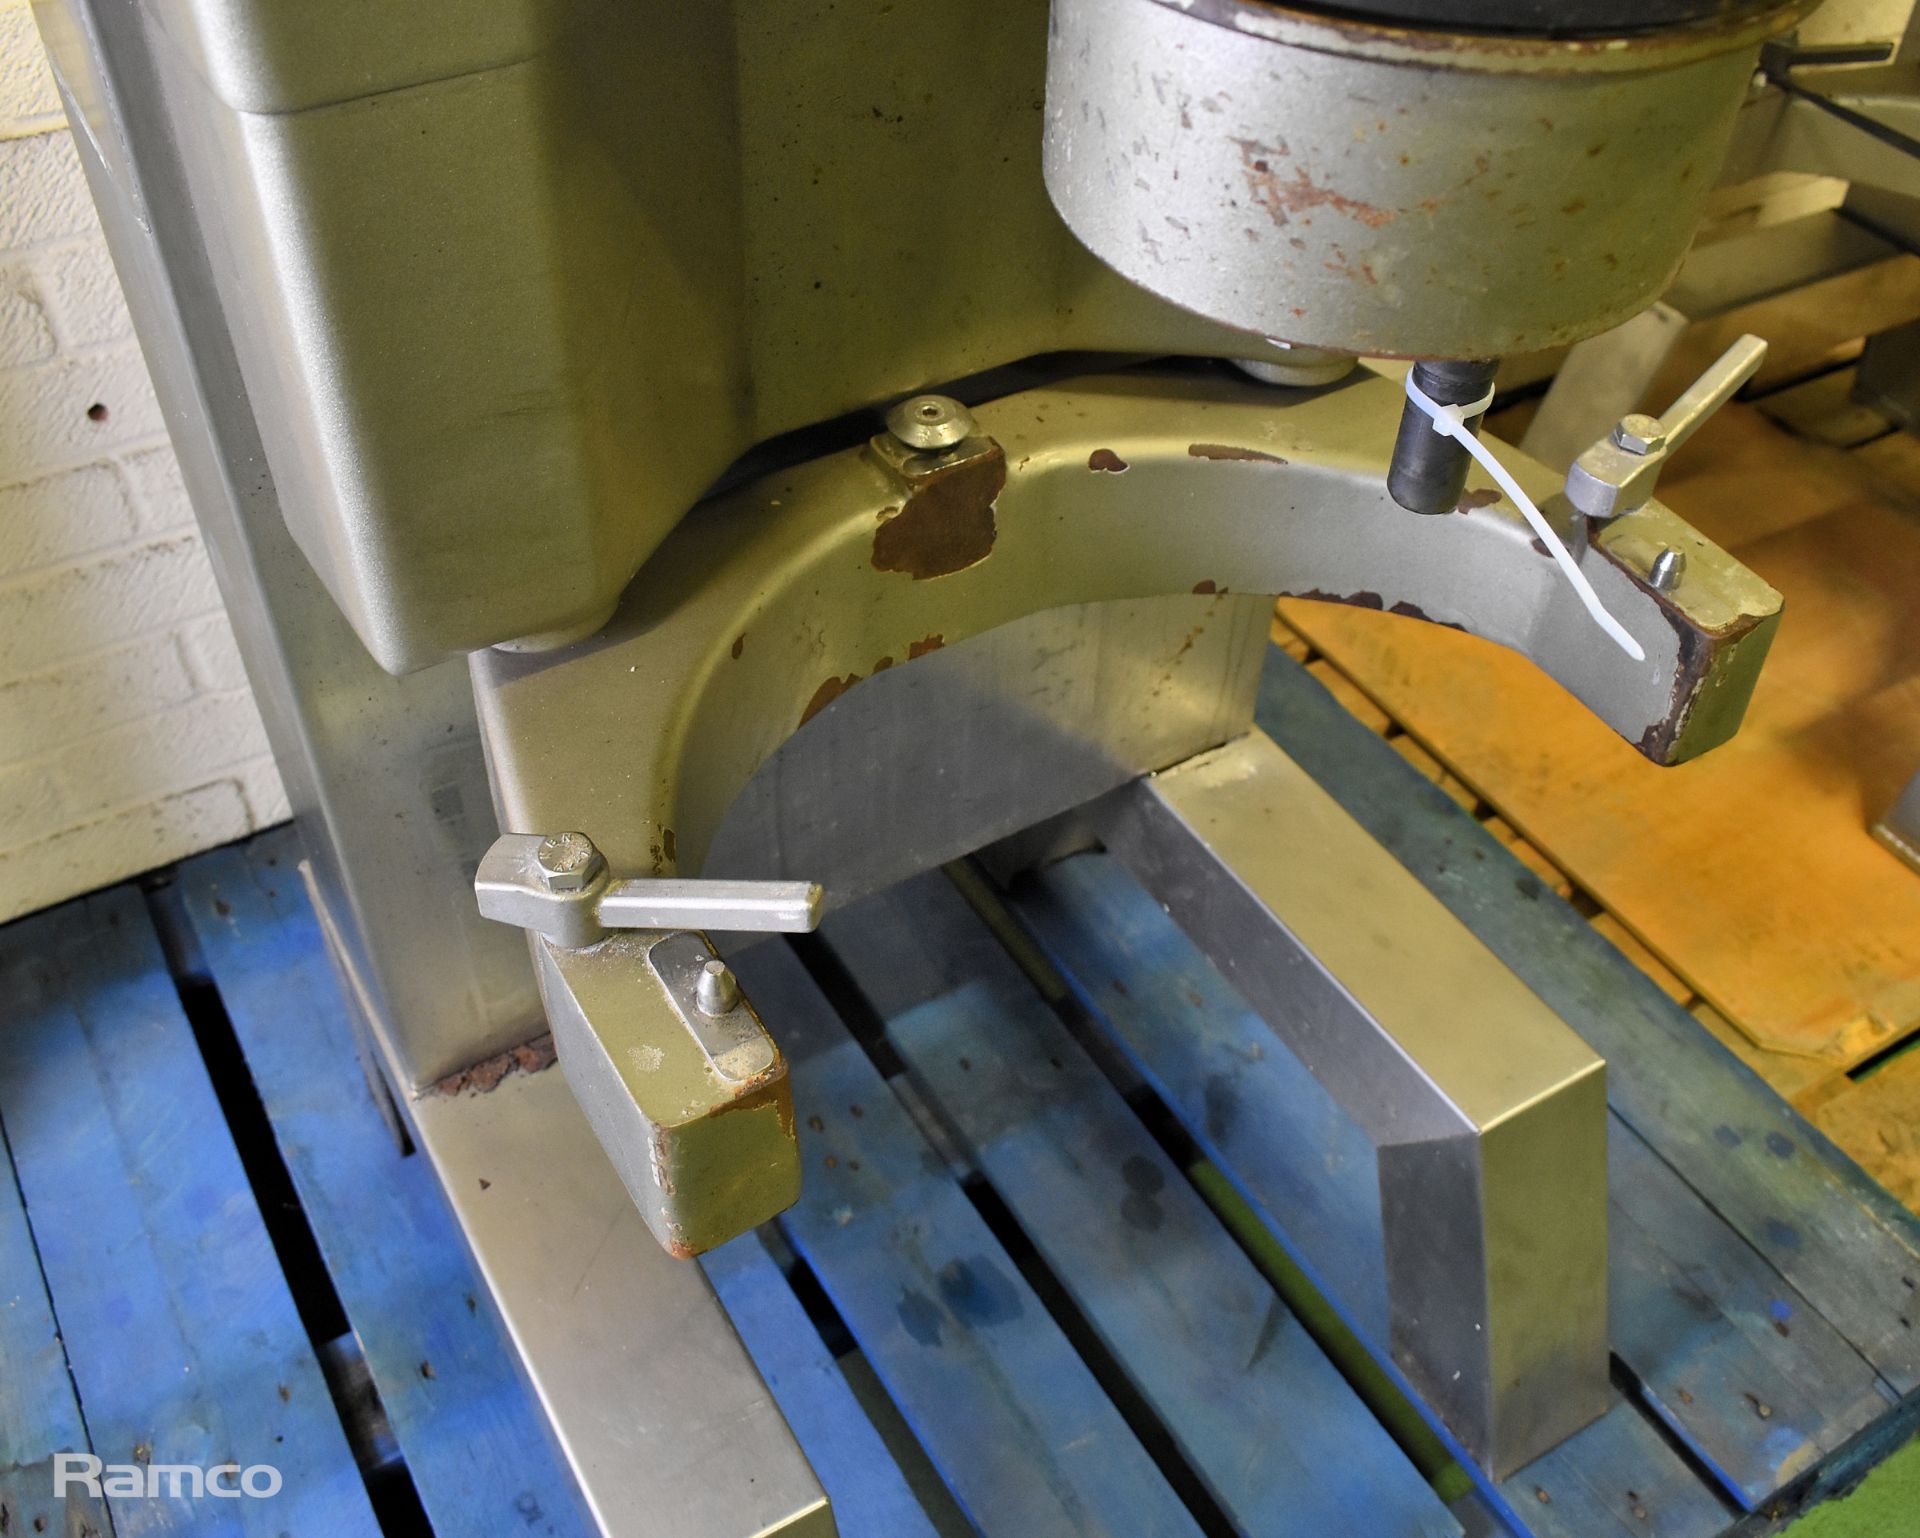 Hobart HSM40 stainless steel commercial floor standing mixer - See description - Image 5 of 8